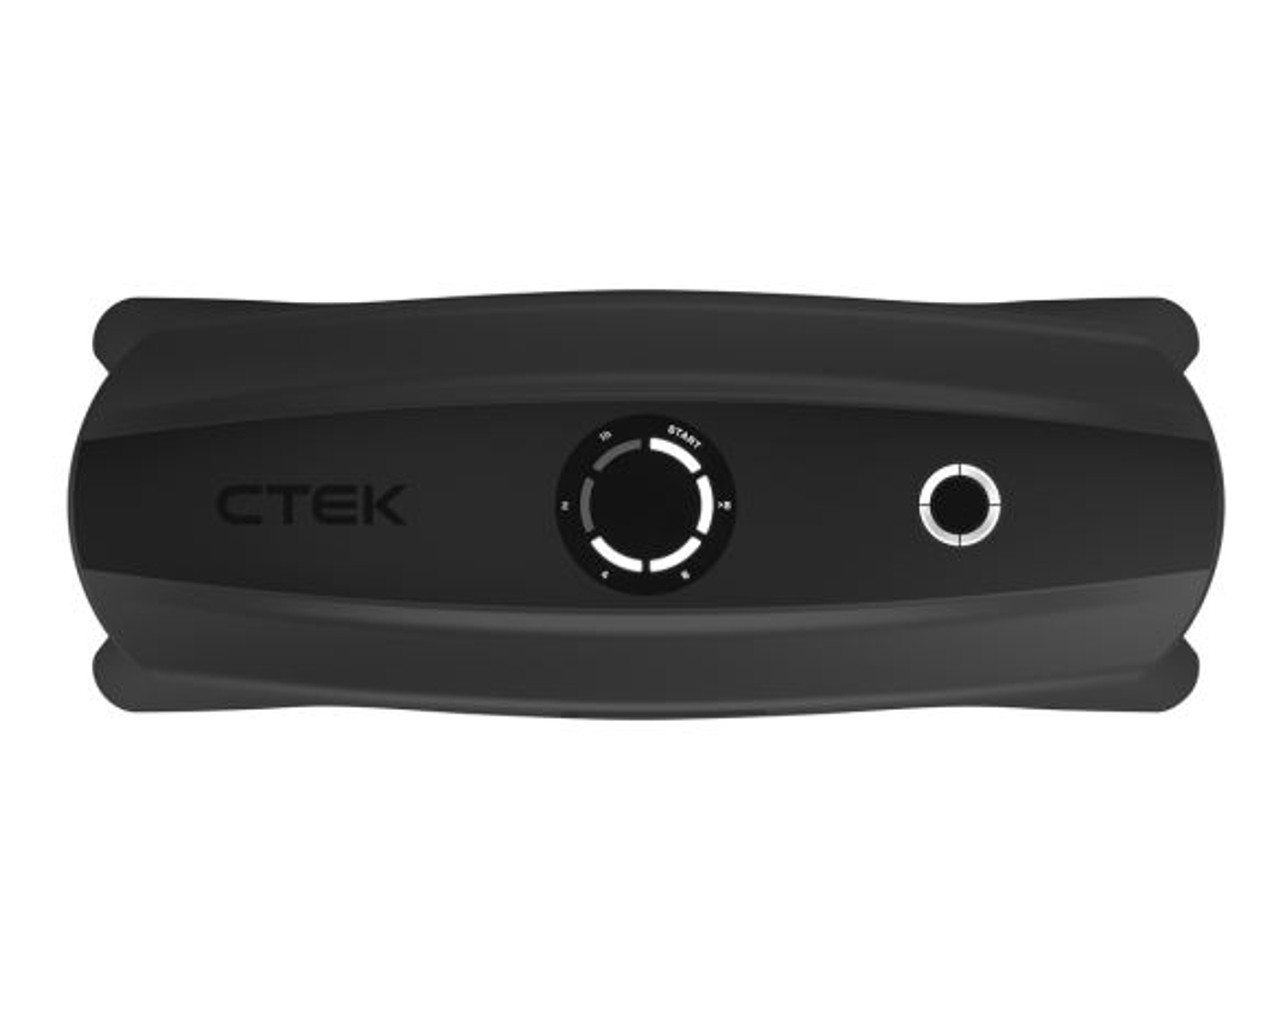 Ctek 40-462 CS Free - 12v Portable Charger – Smarter Chargers